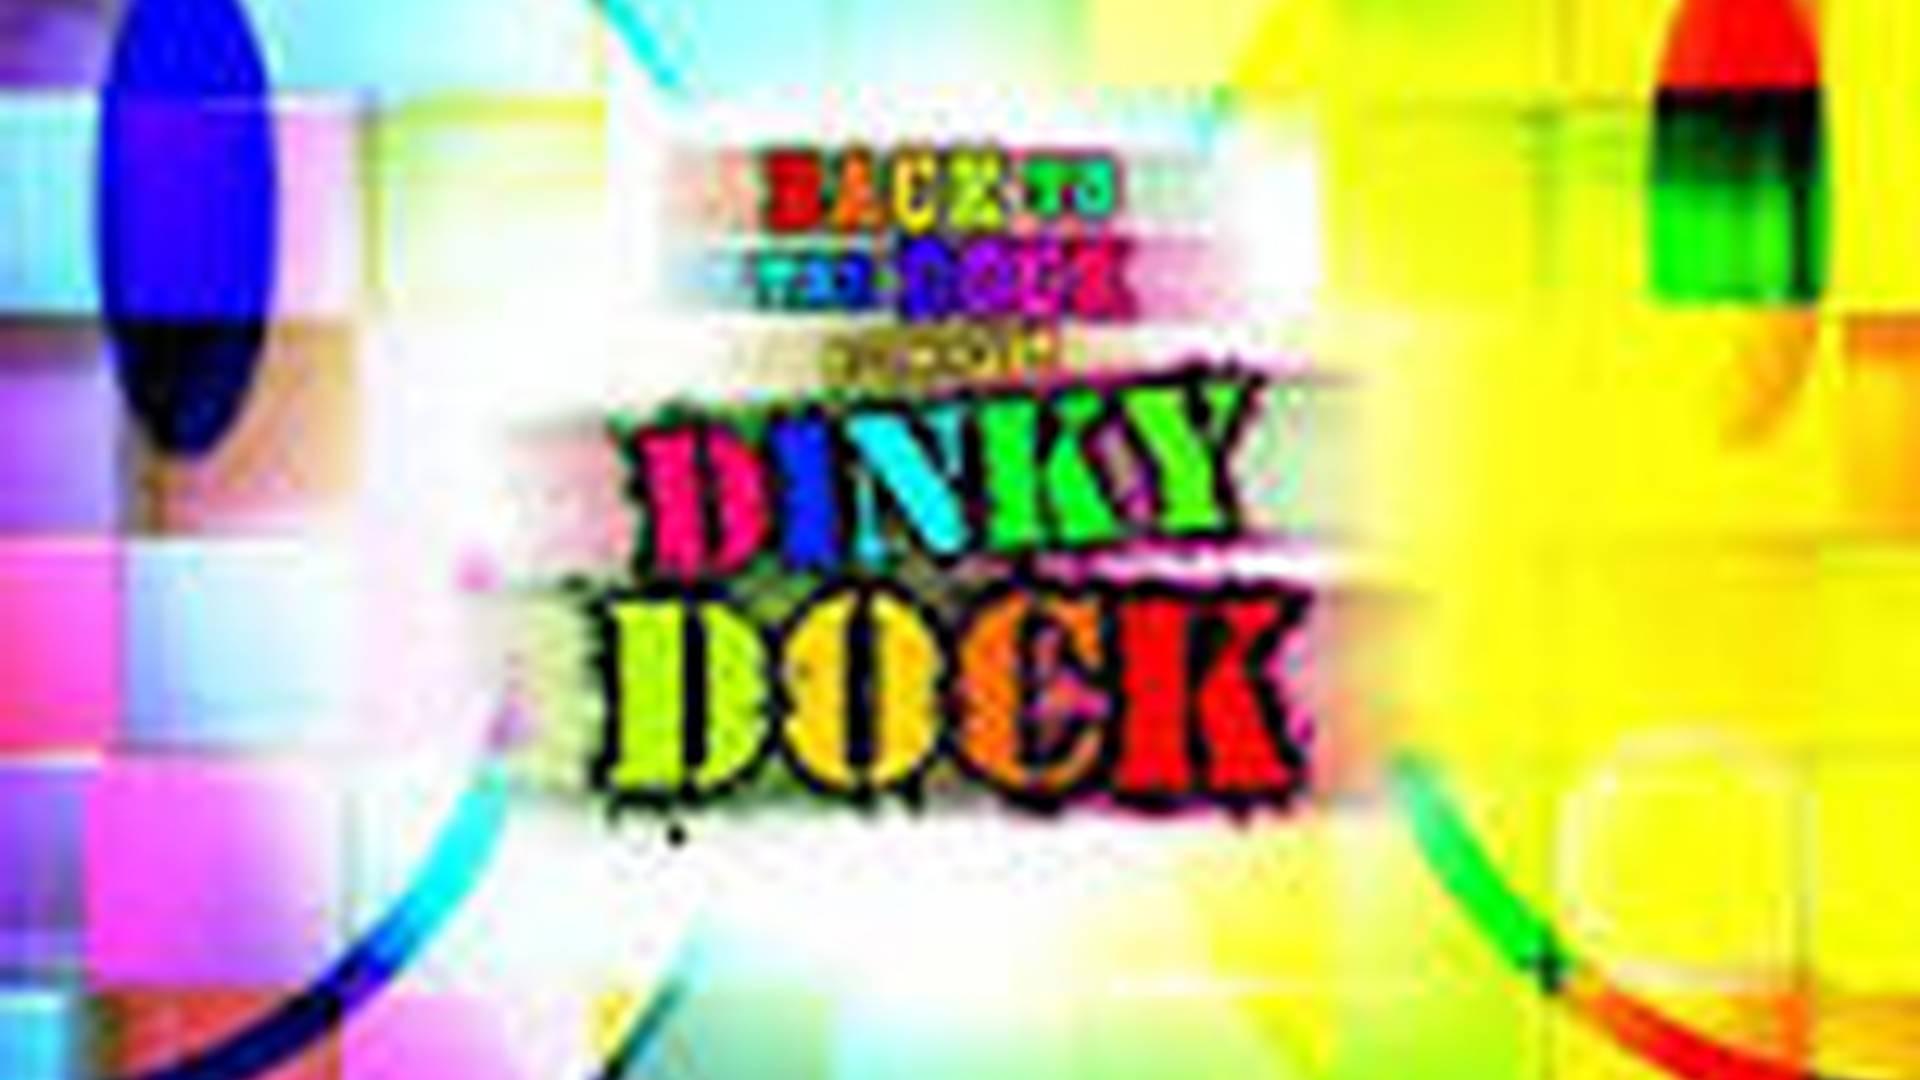 Dinky Dock photo